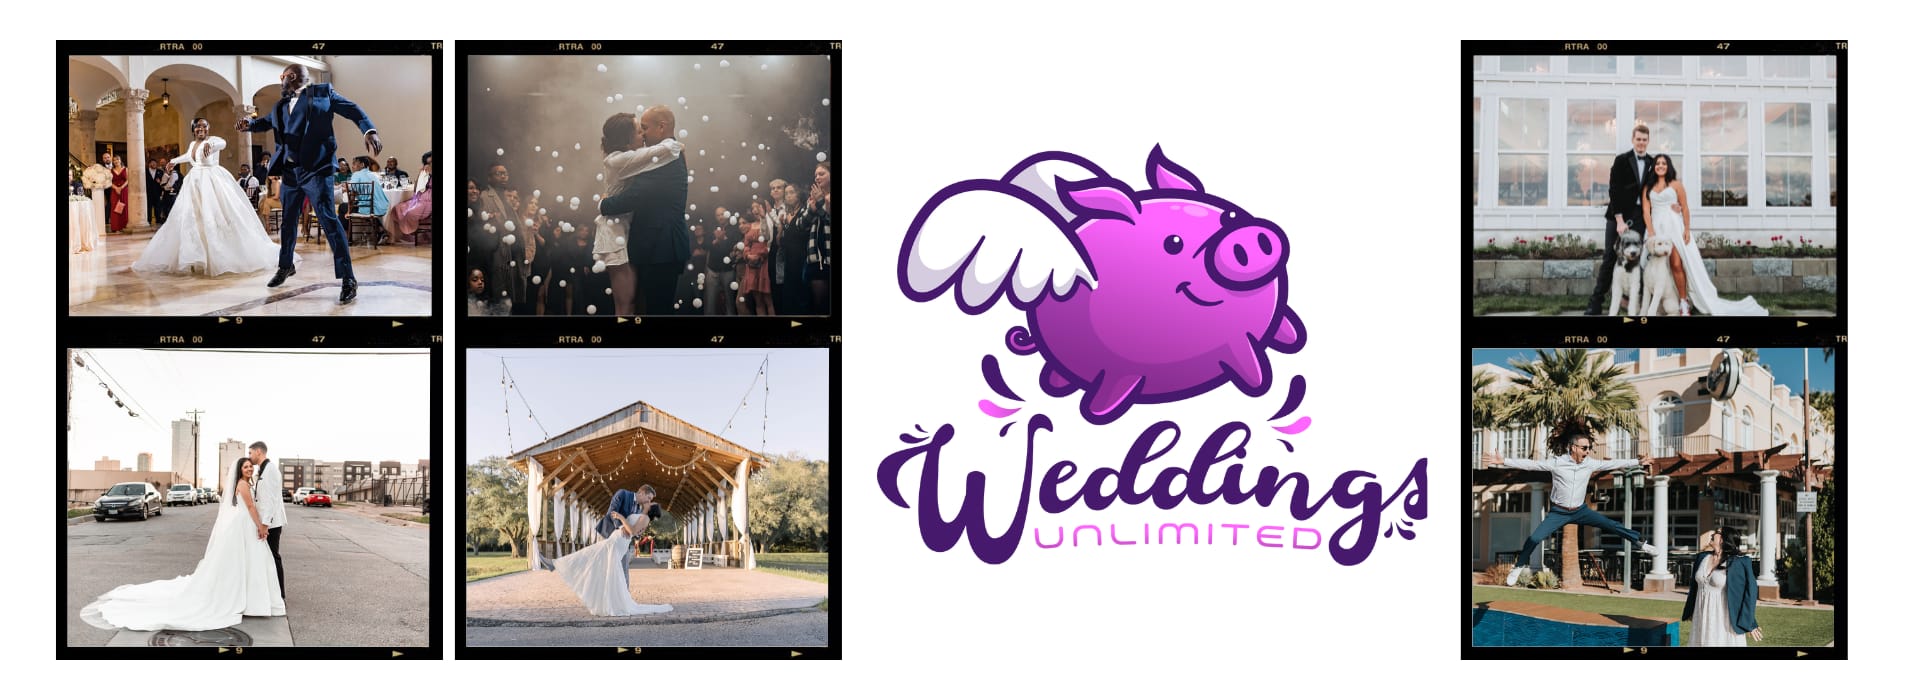 Dj Listing Category Weddings Unlimited